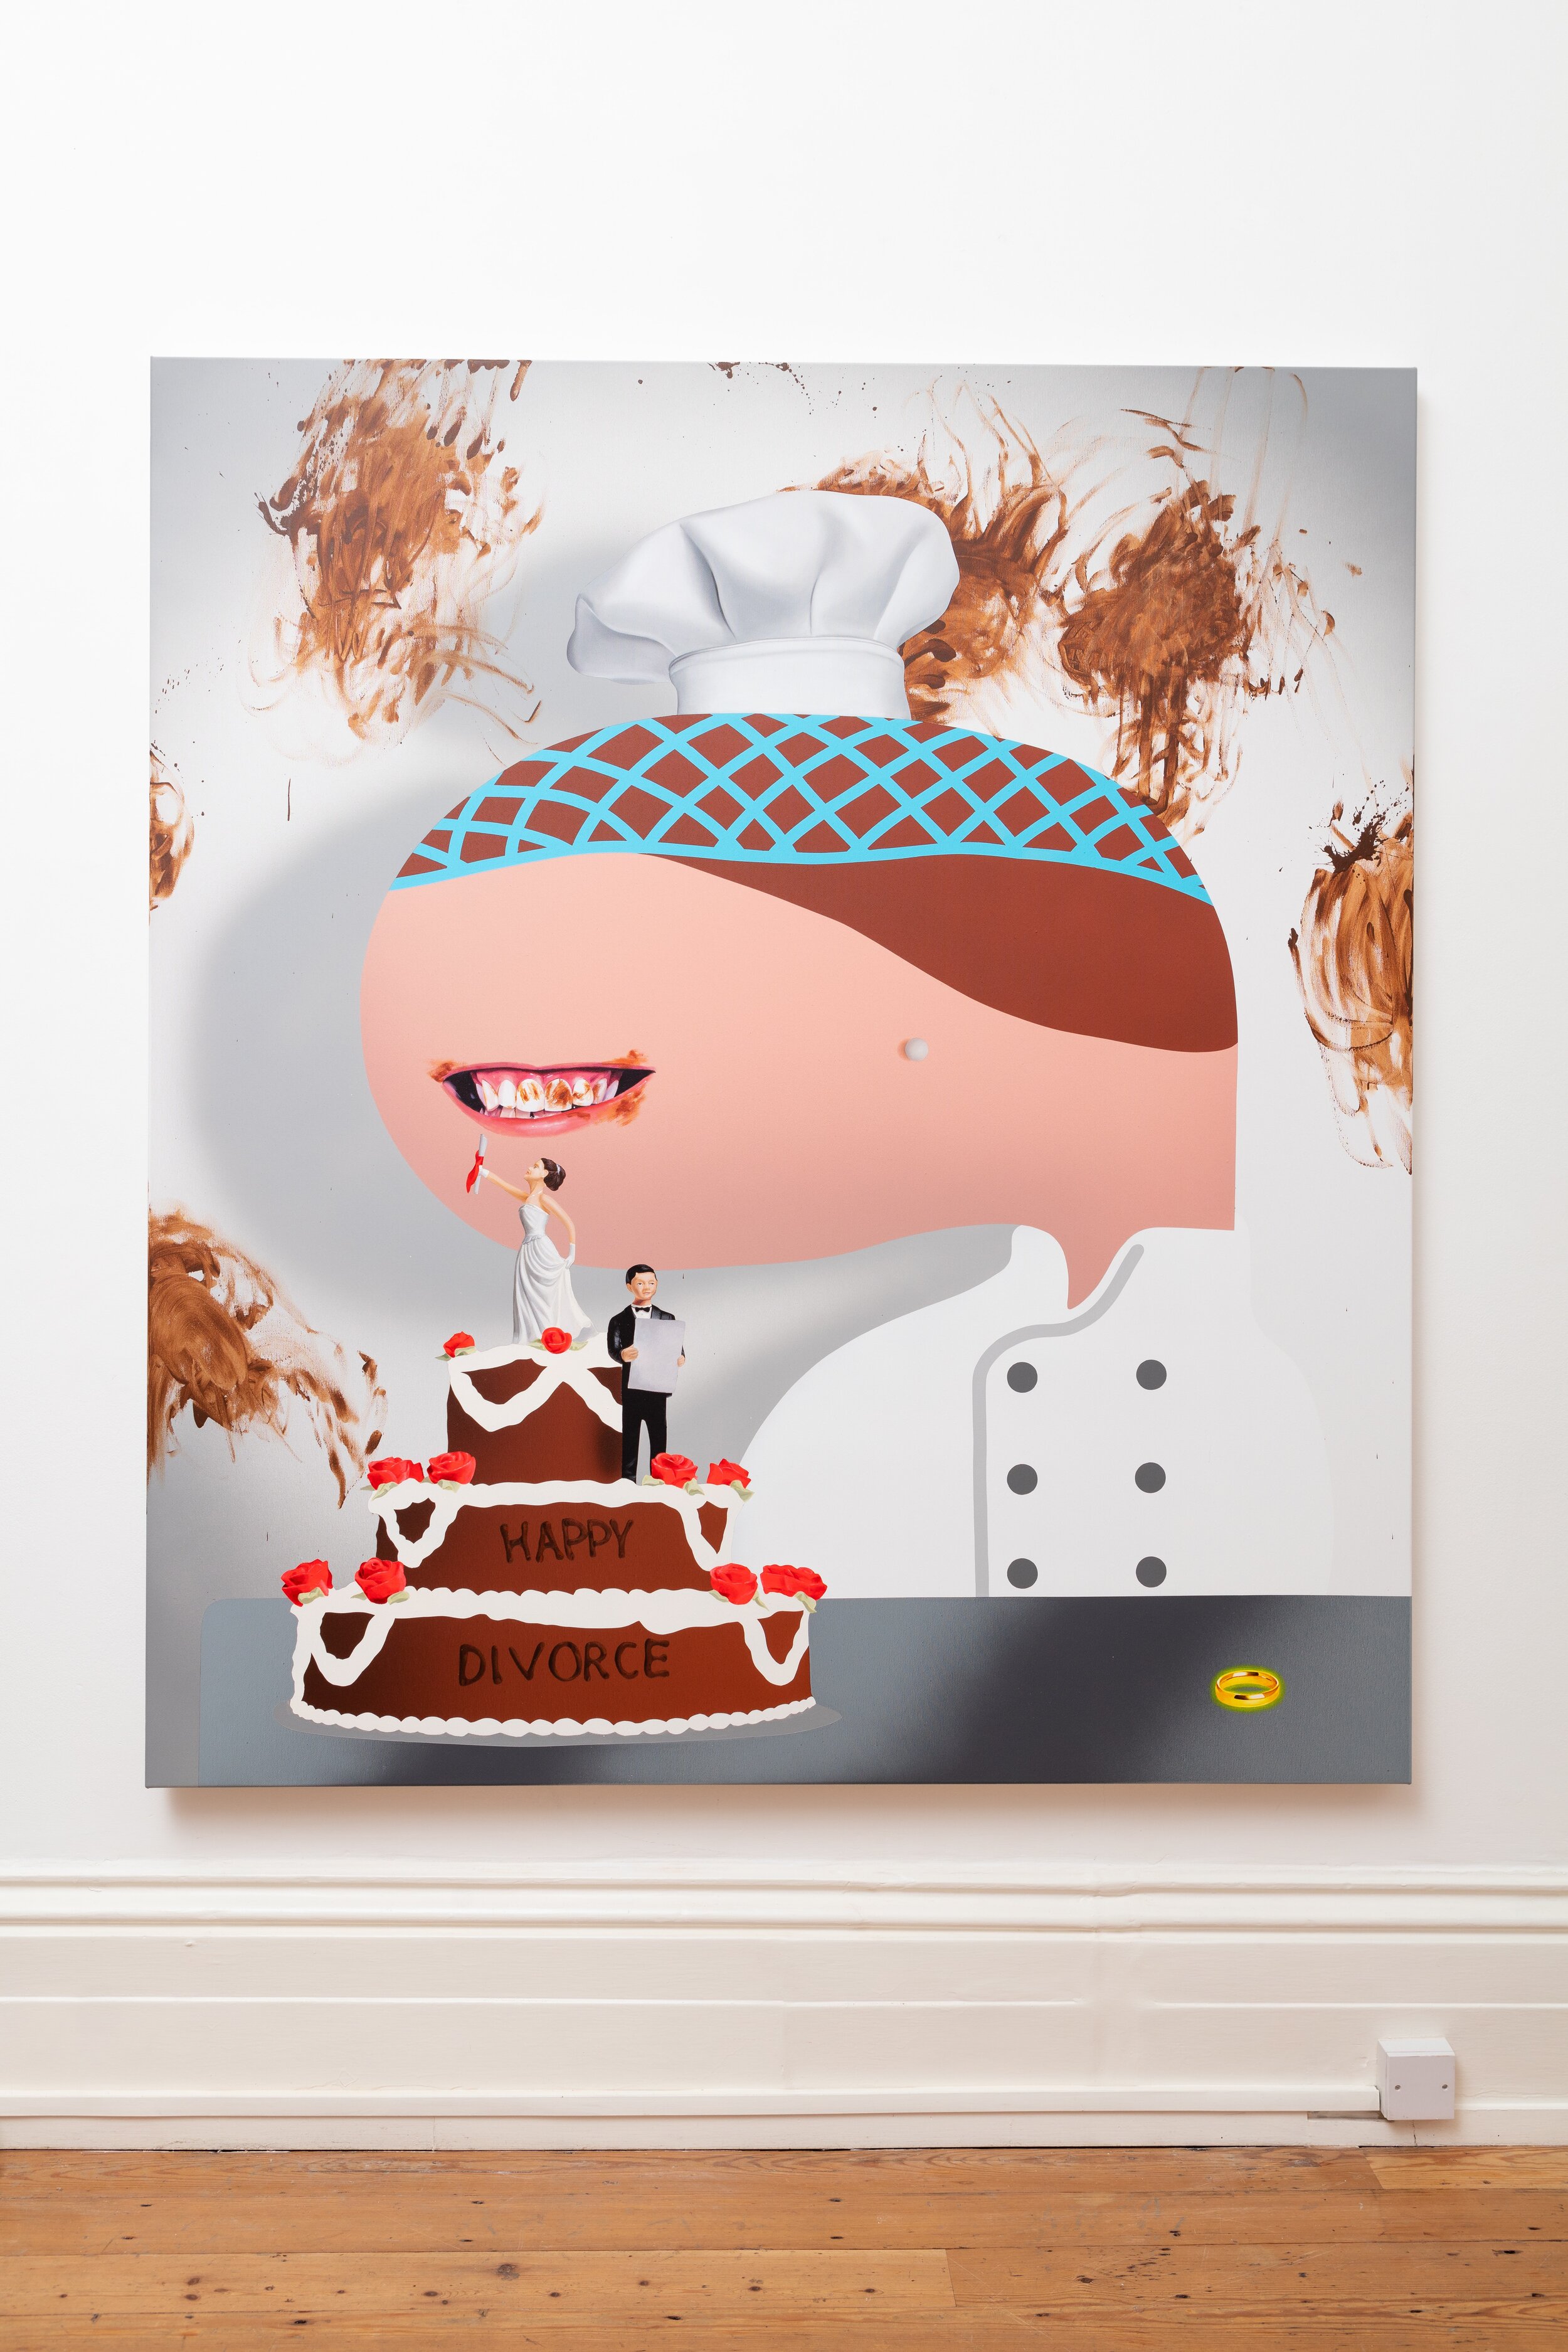   ‘Divorce Cake’, 2019, oil and acrylic on canvas, 150cm x 180cm 